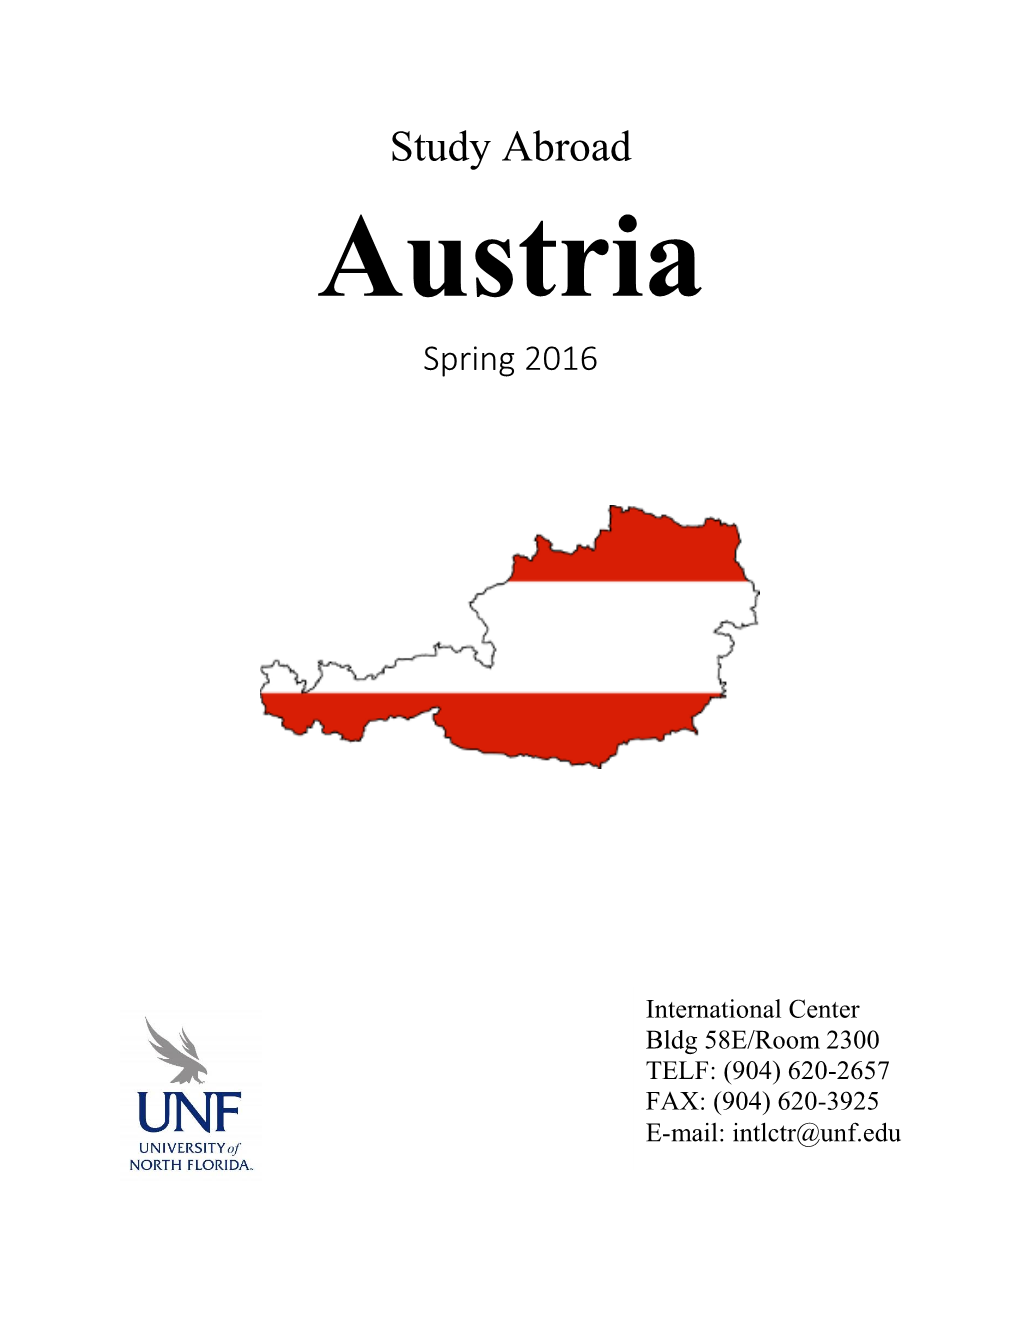 Study Abroad Austria Spring 2016